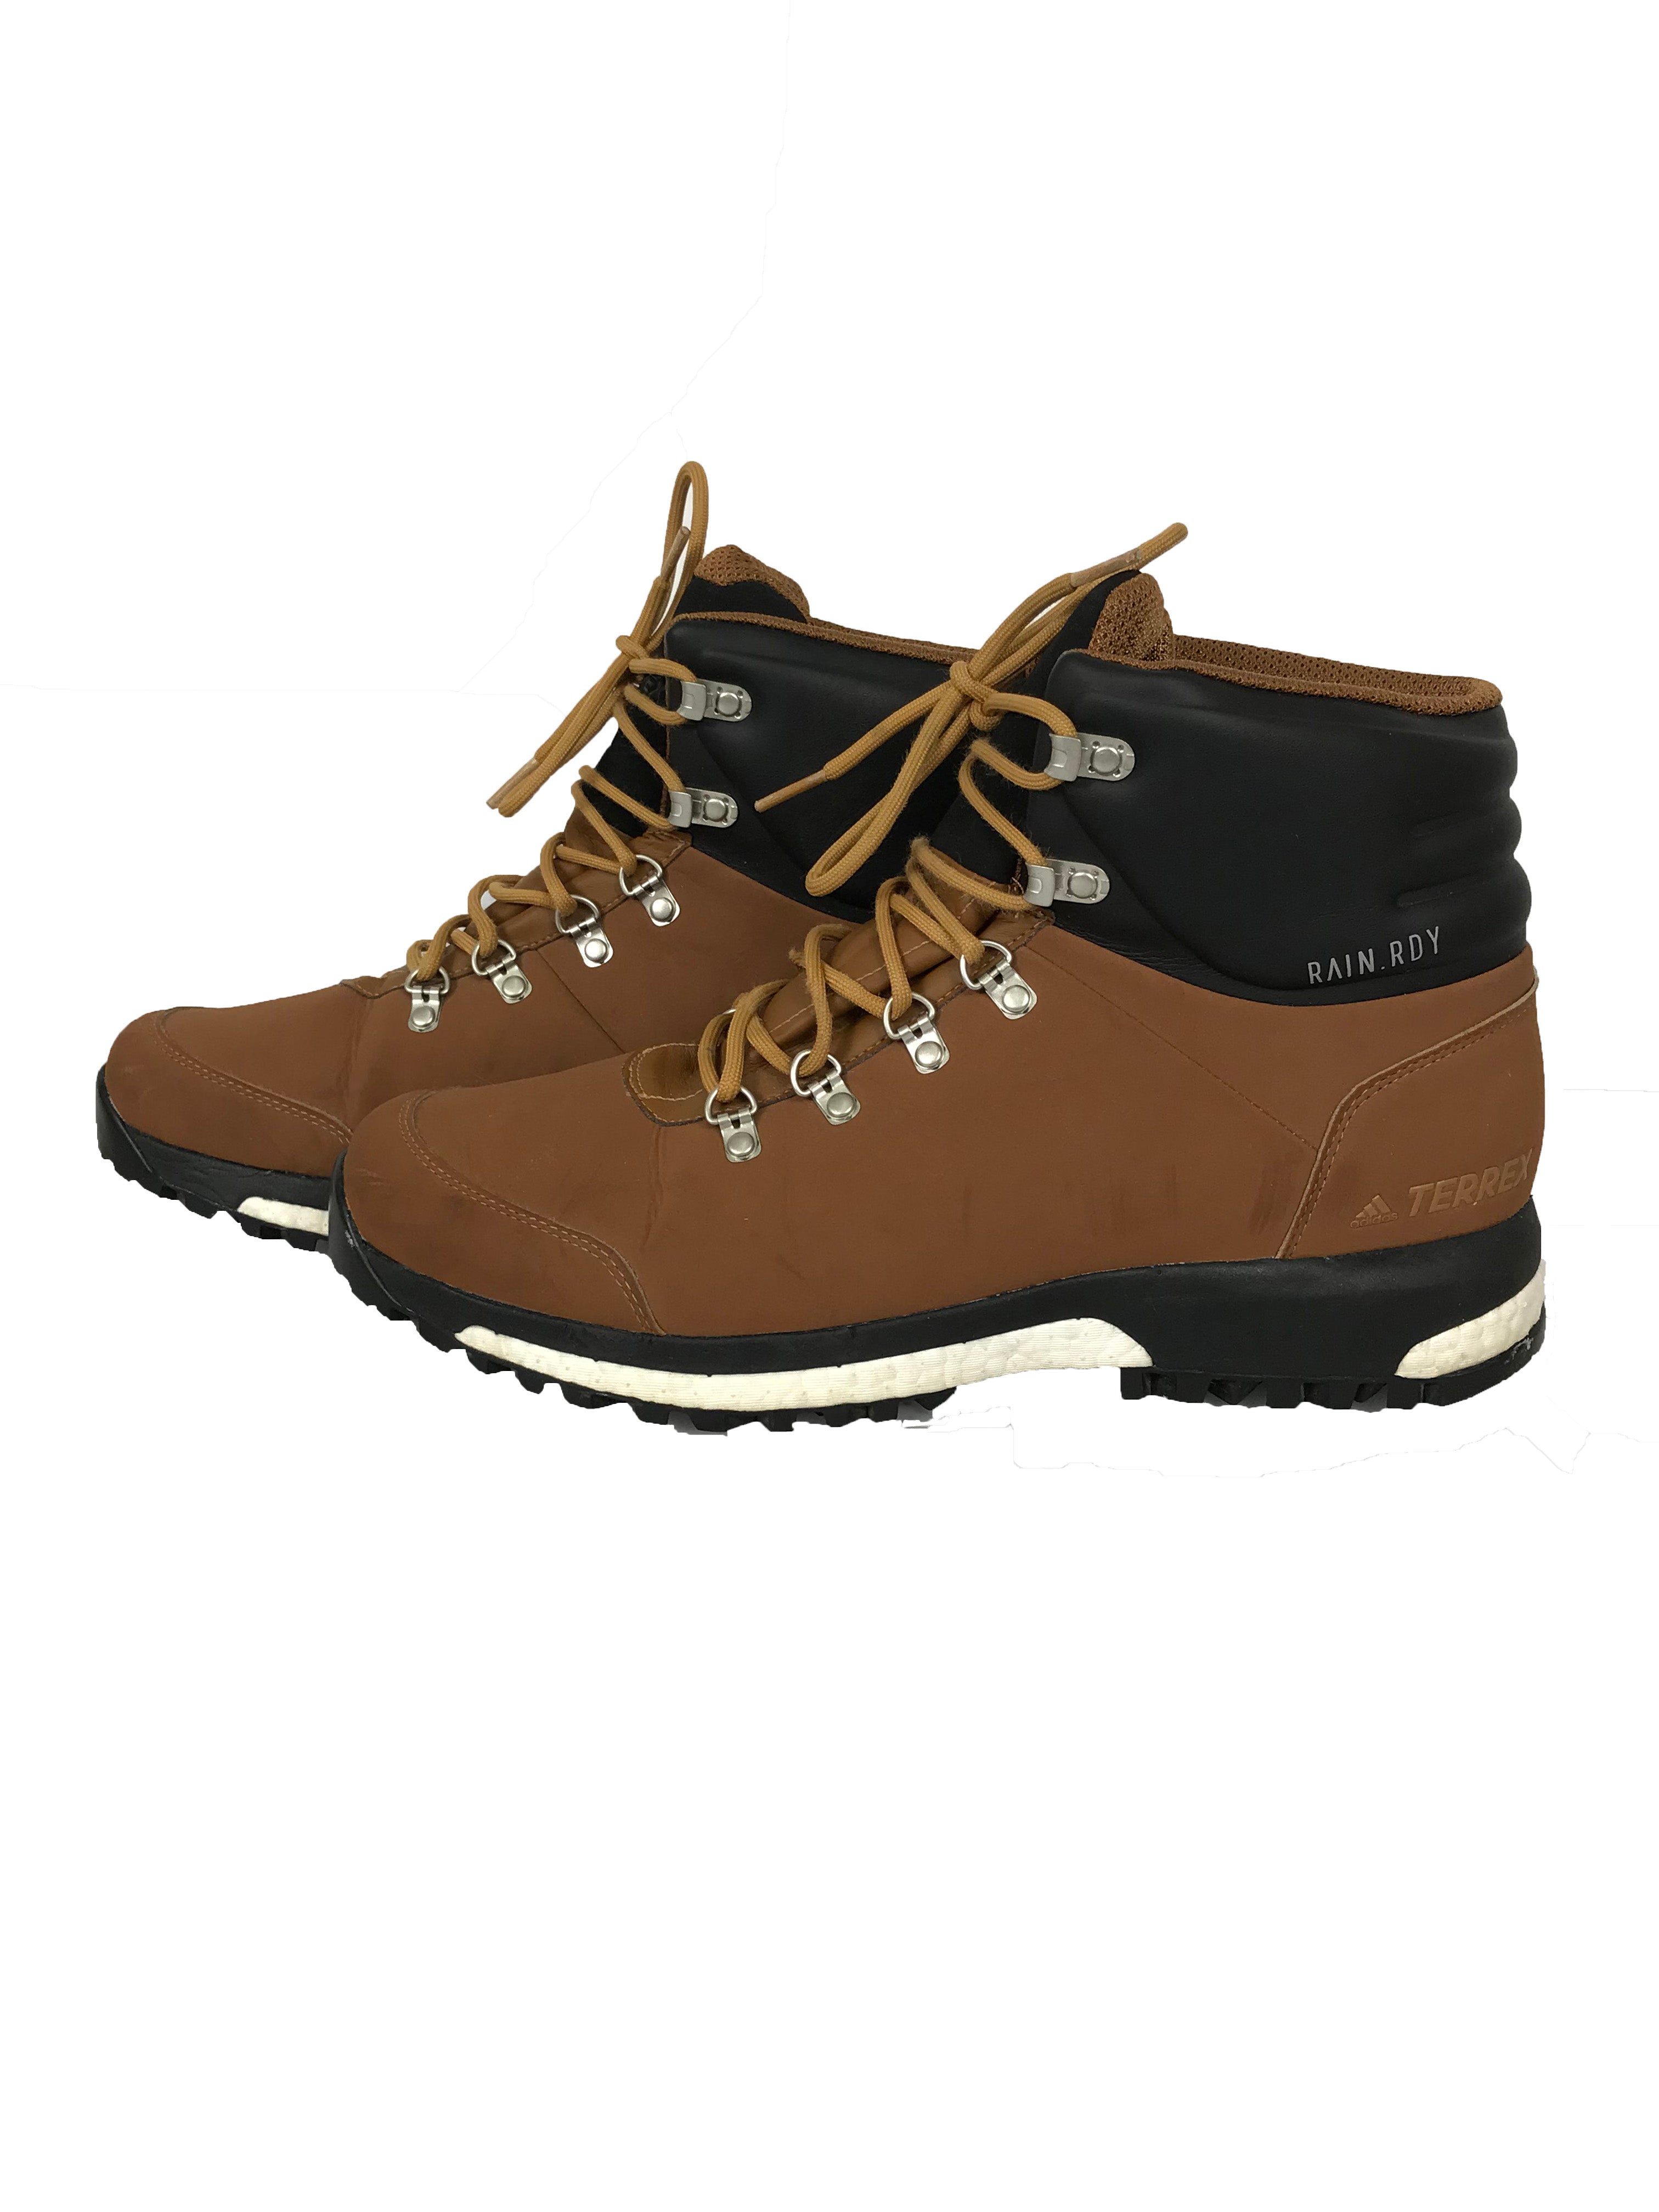 Adidas Terrex Pathmaker Brown Hiking Boots Men's Size 11